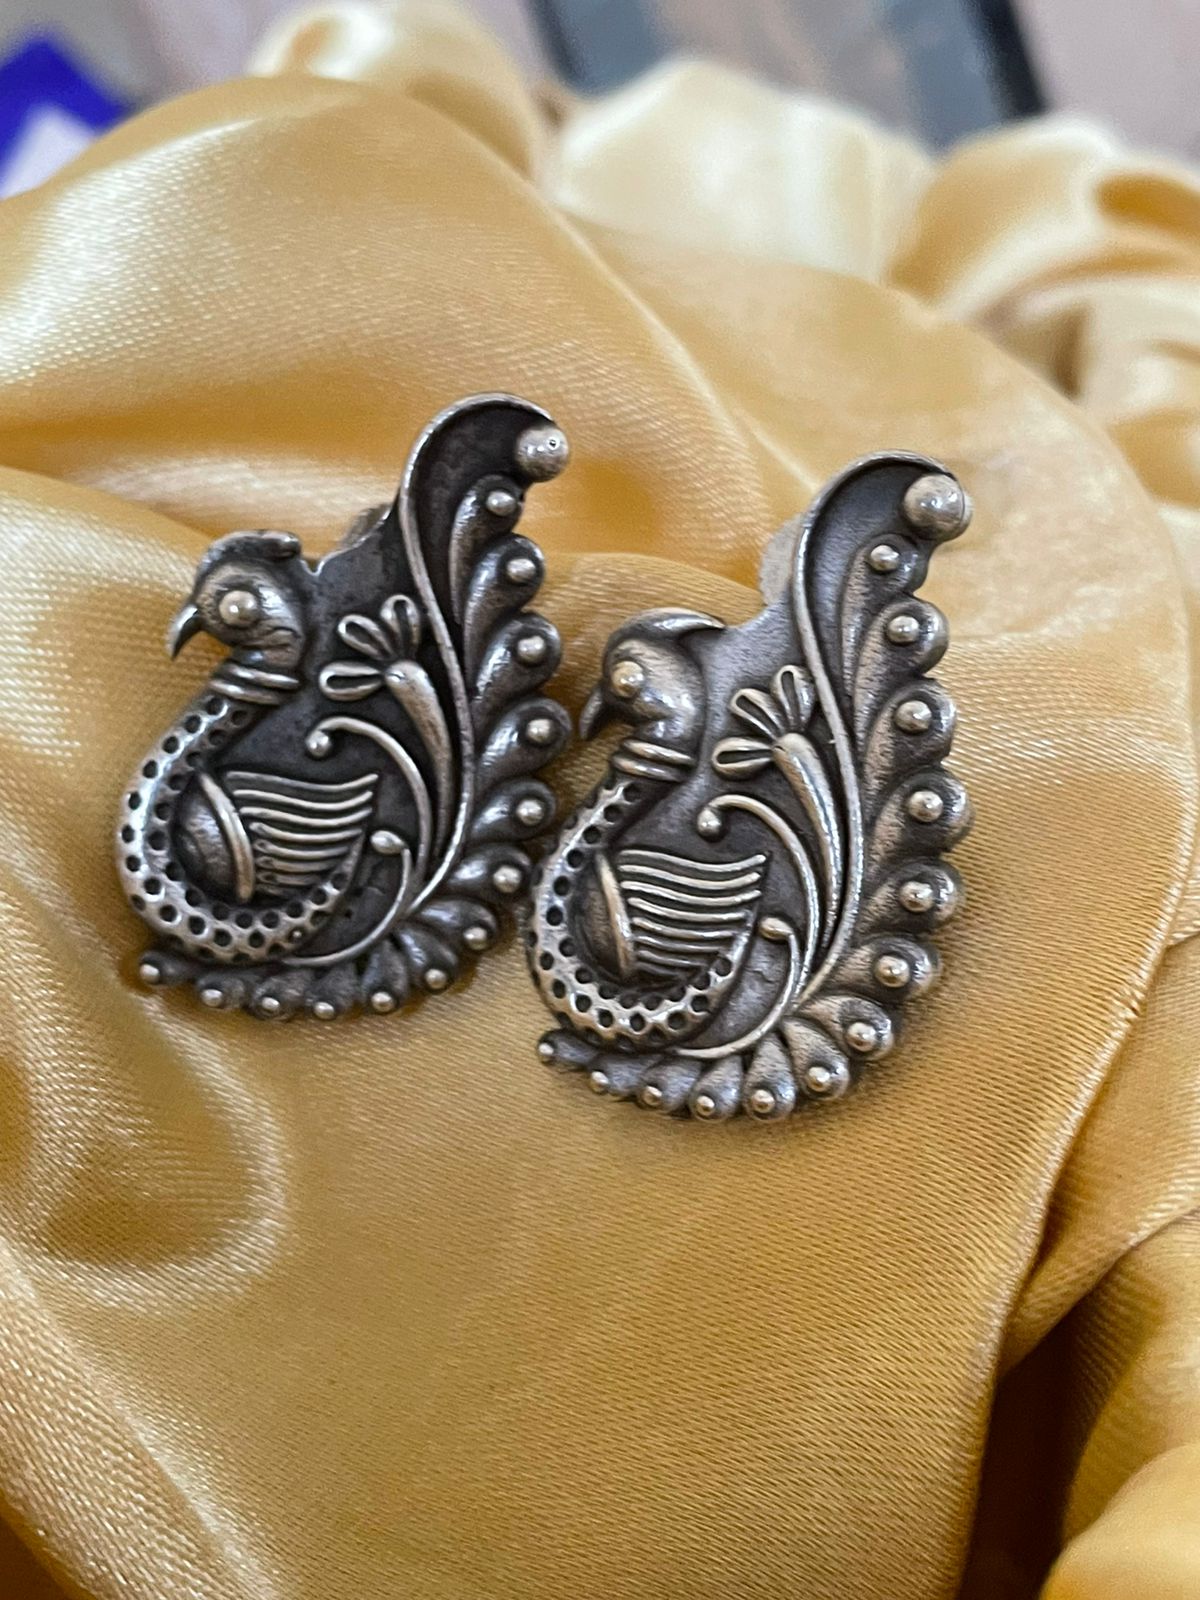 Peacock Earring